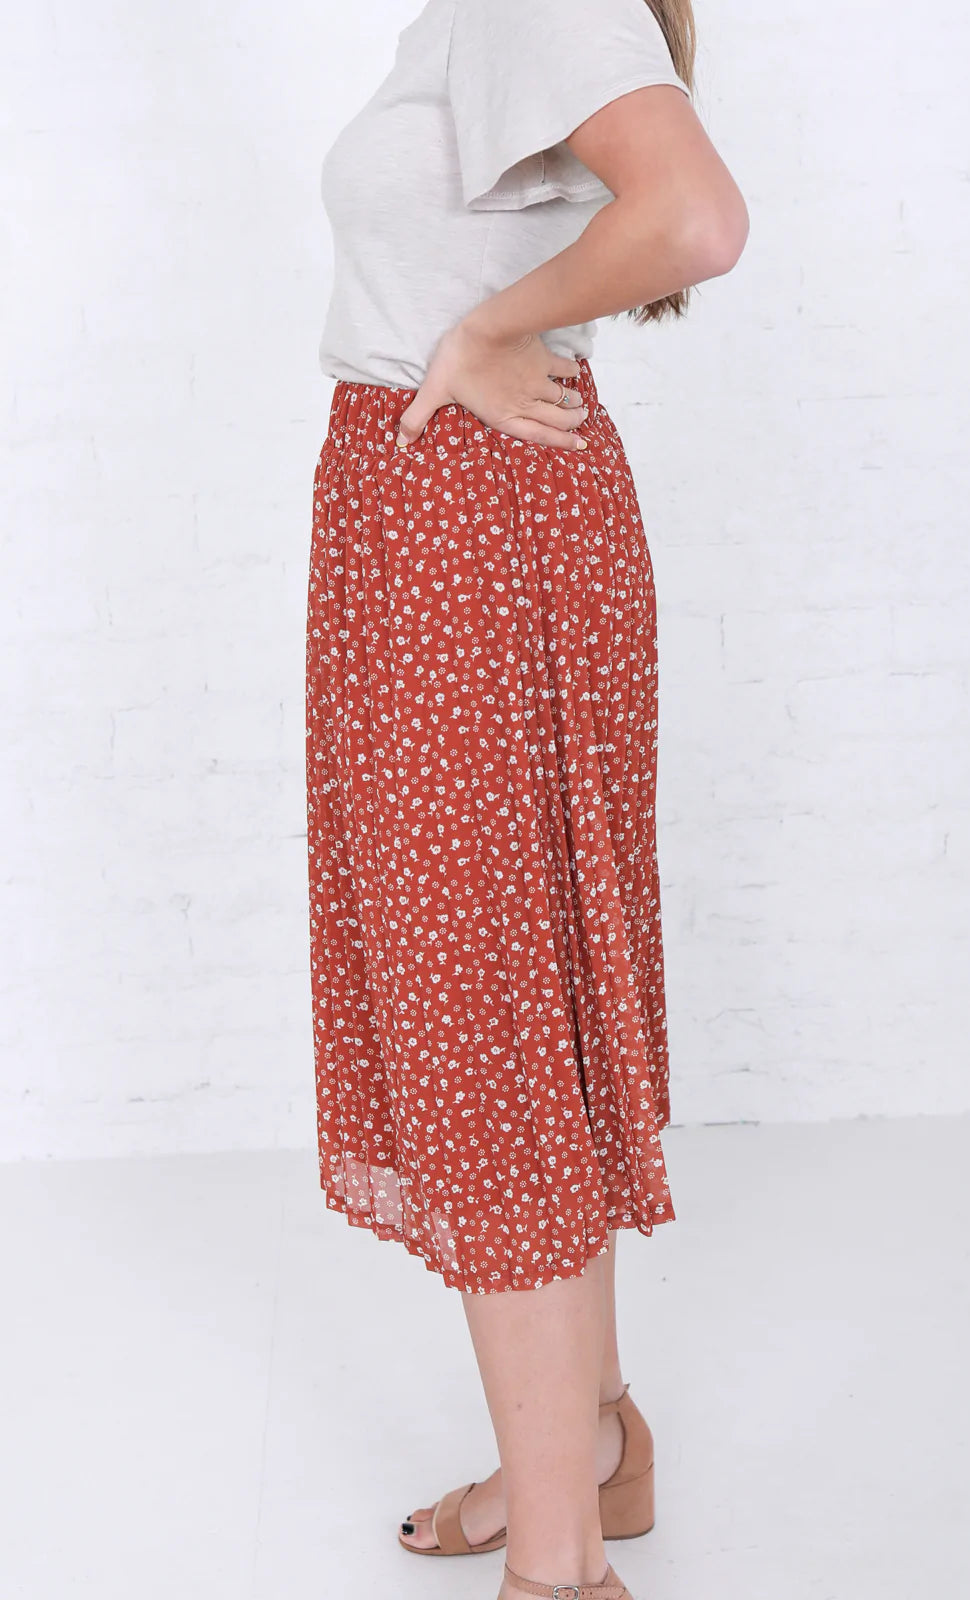 Accordion Pleated Skirt in Rust Petunia (Size XL) - Final Sale    mikarose dress Mikarose- Tilden Co.